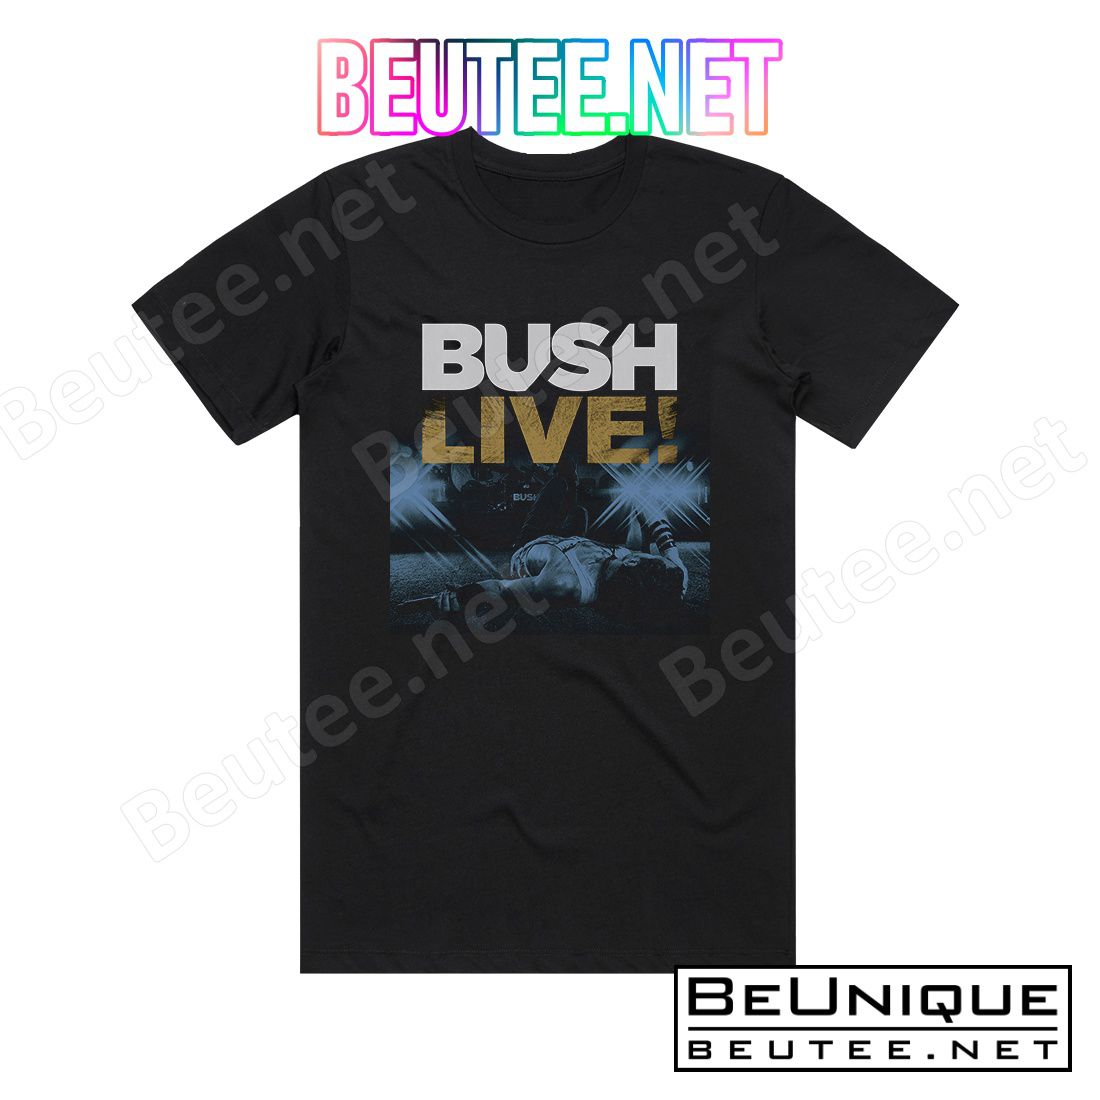 Bush Live Album Cover T-Shirt